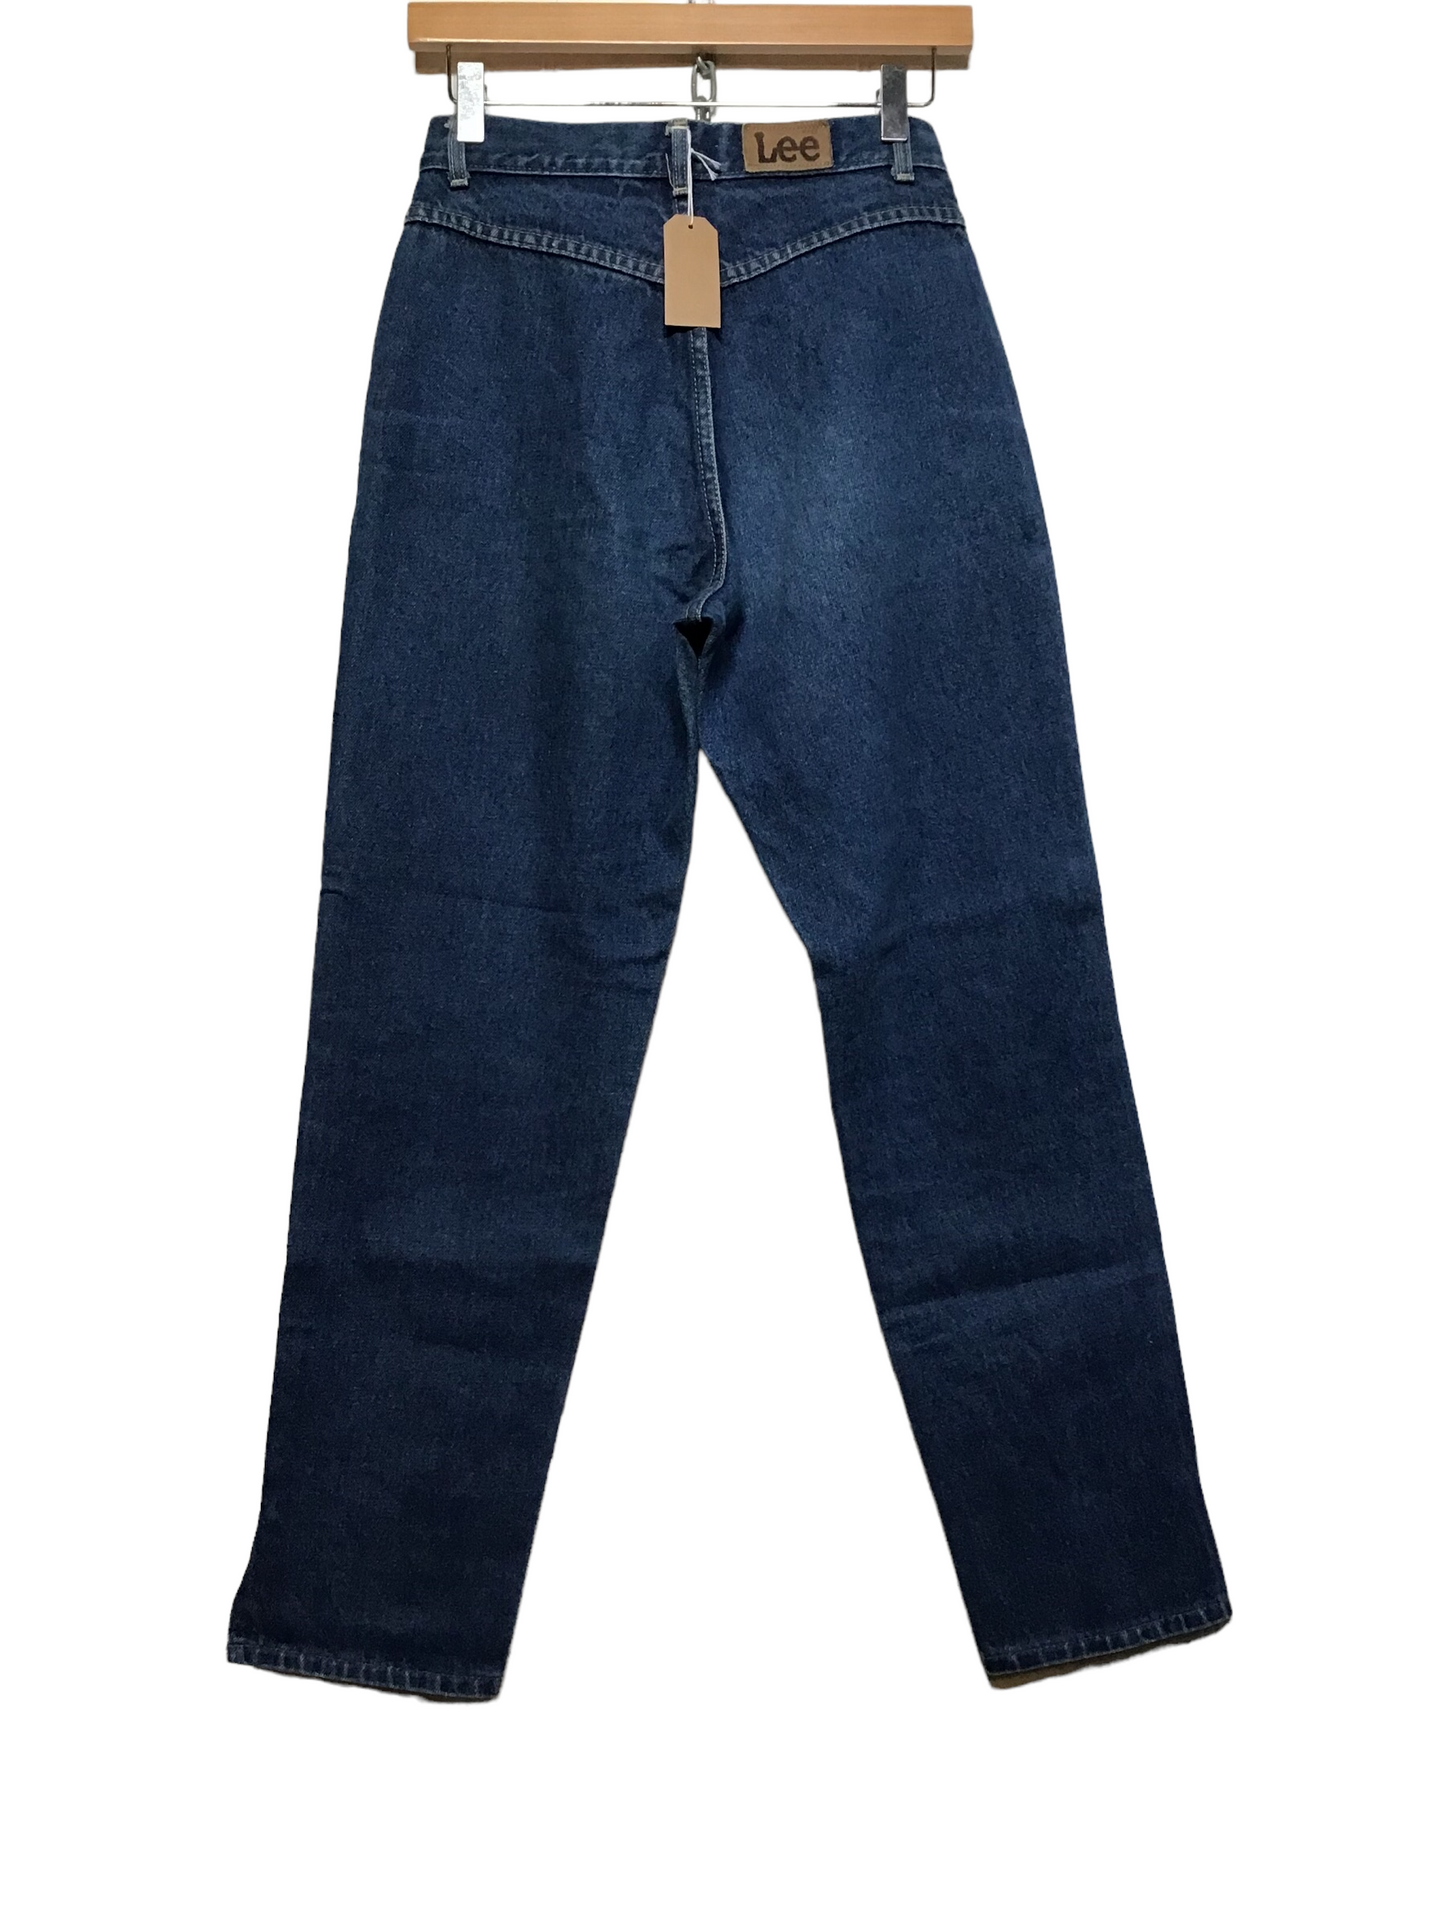 Lee Dark Denim Jeans (26X27)